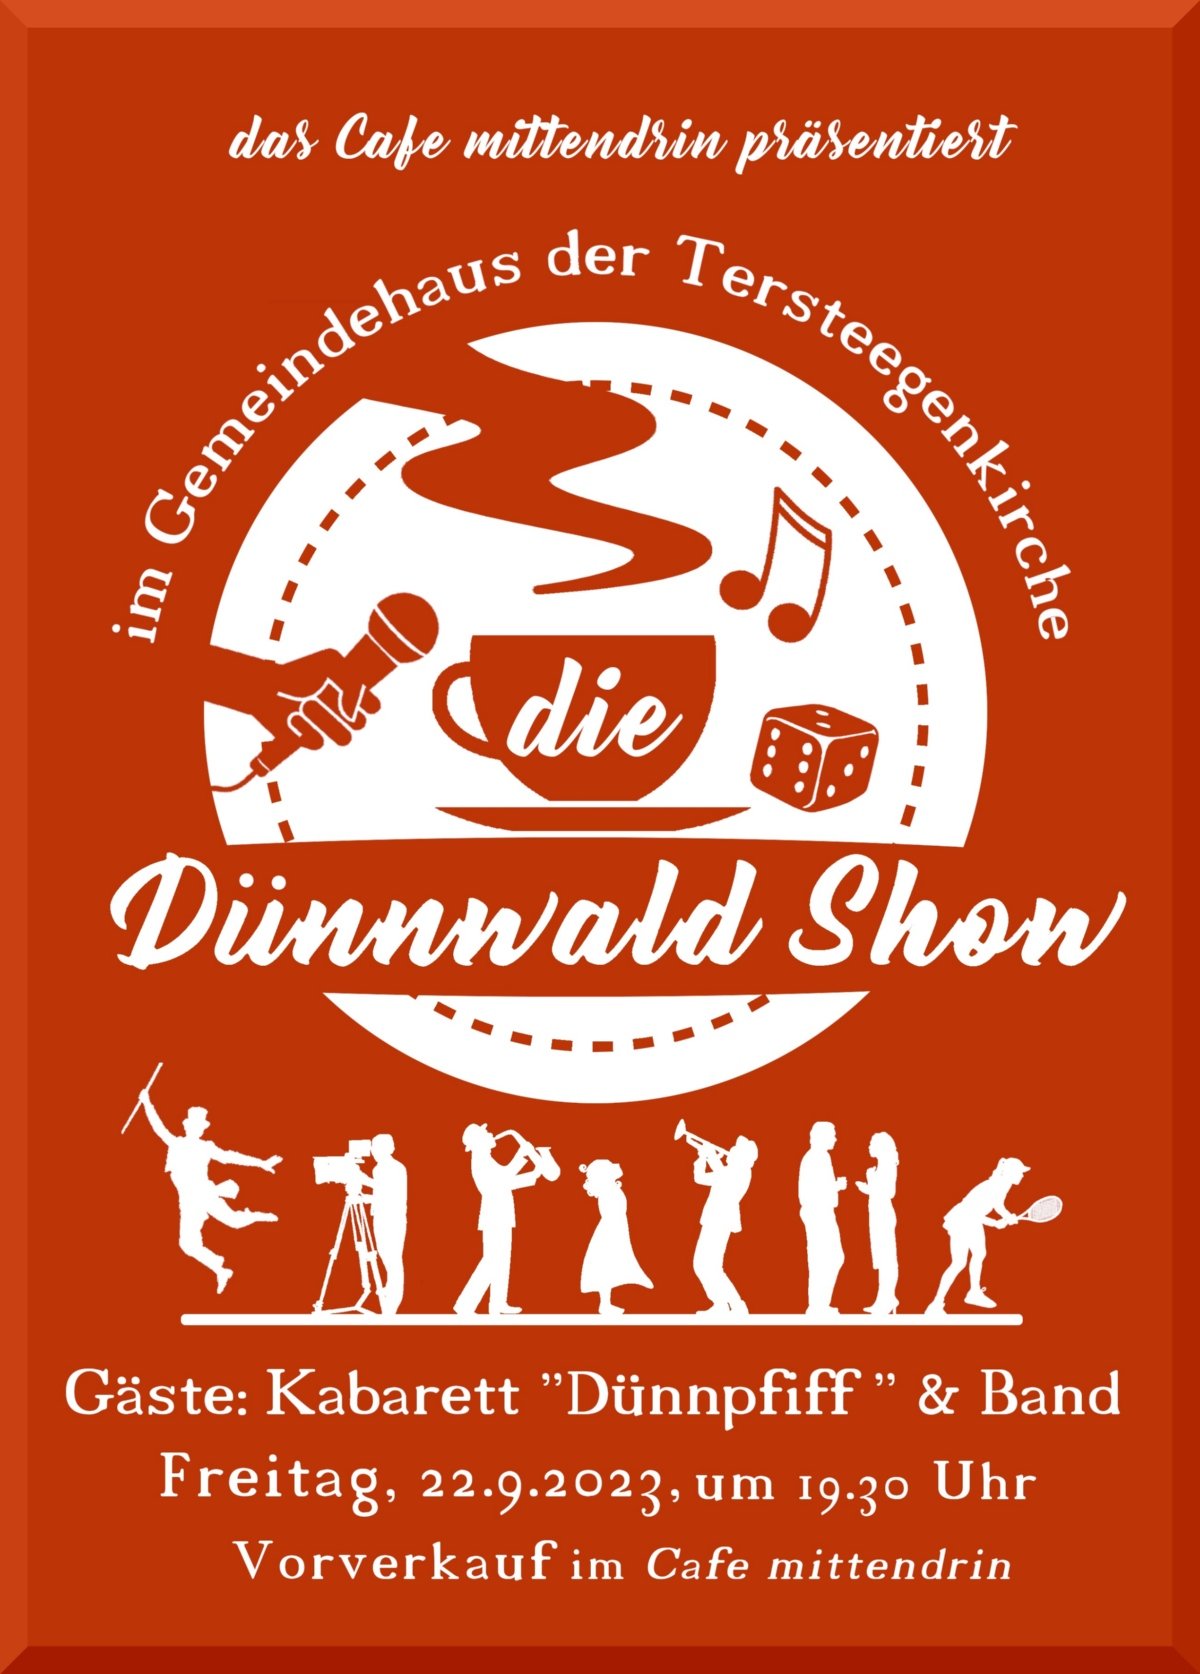 Plakat Dünnwald Show Dünnpfiff (c) Berberich